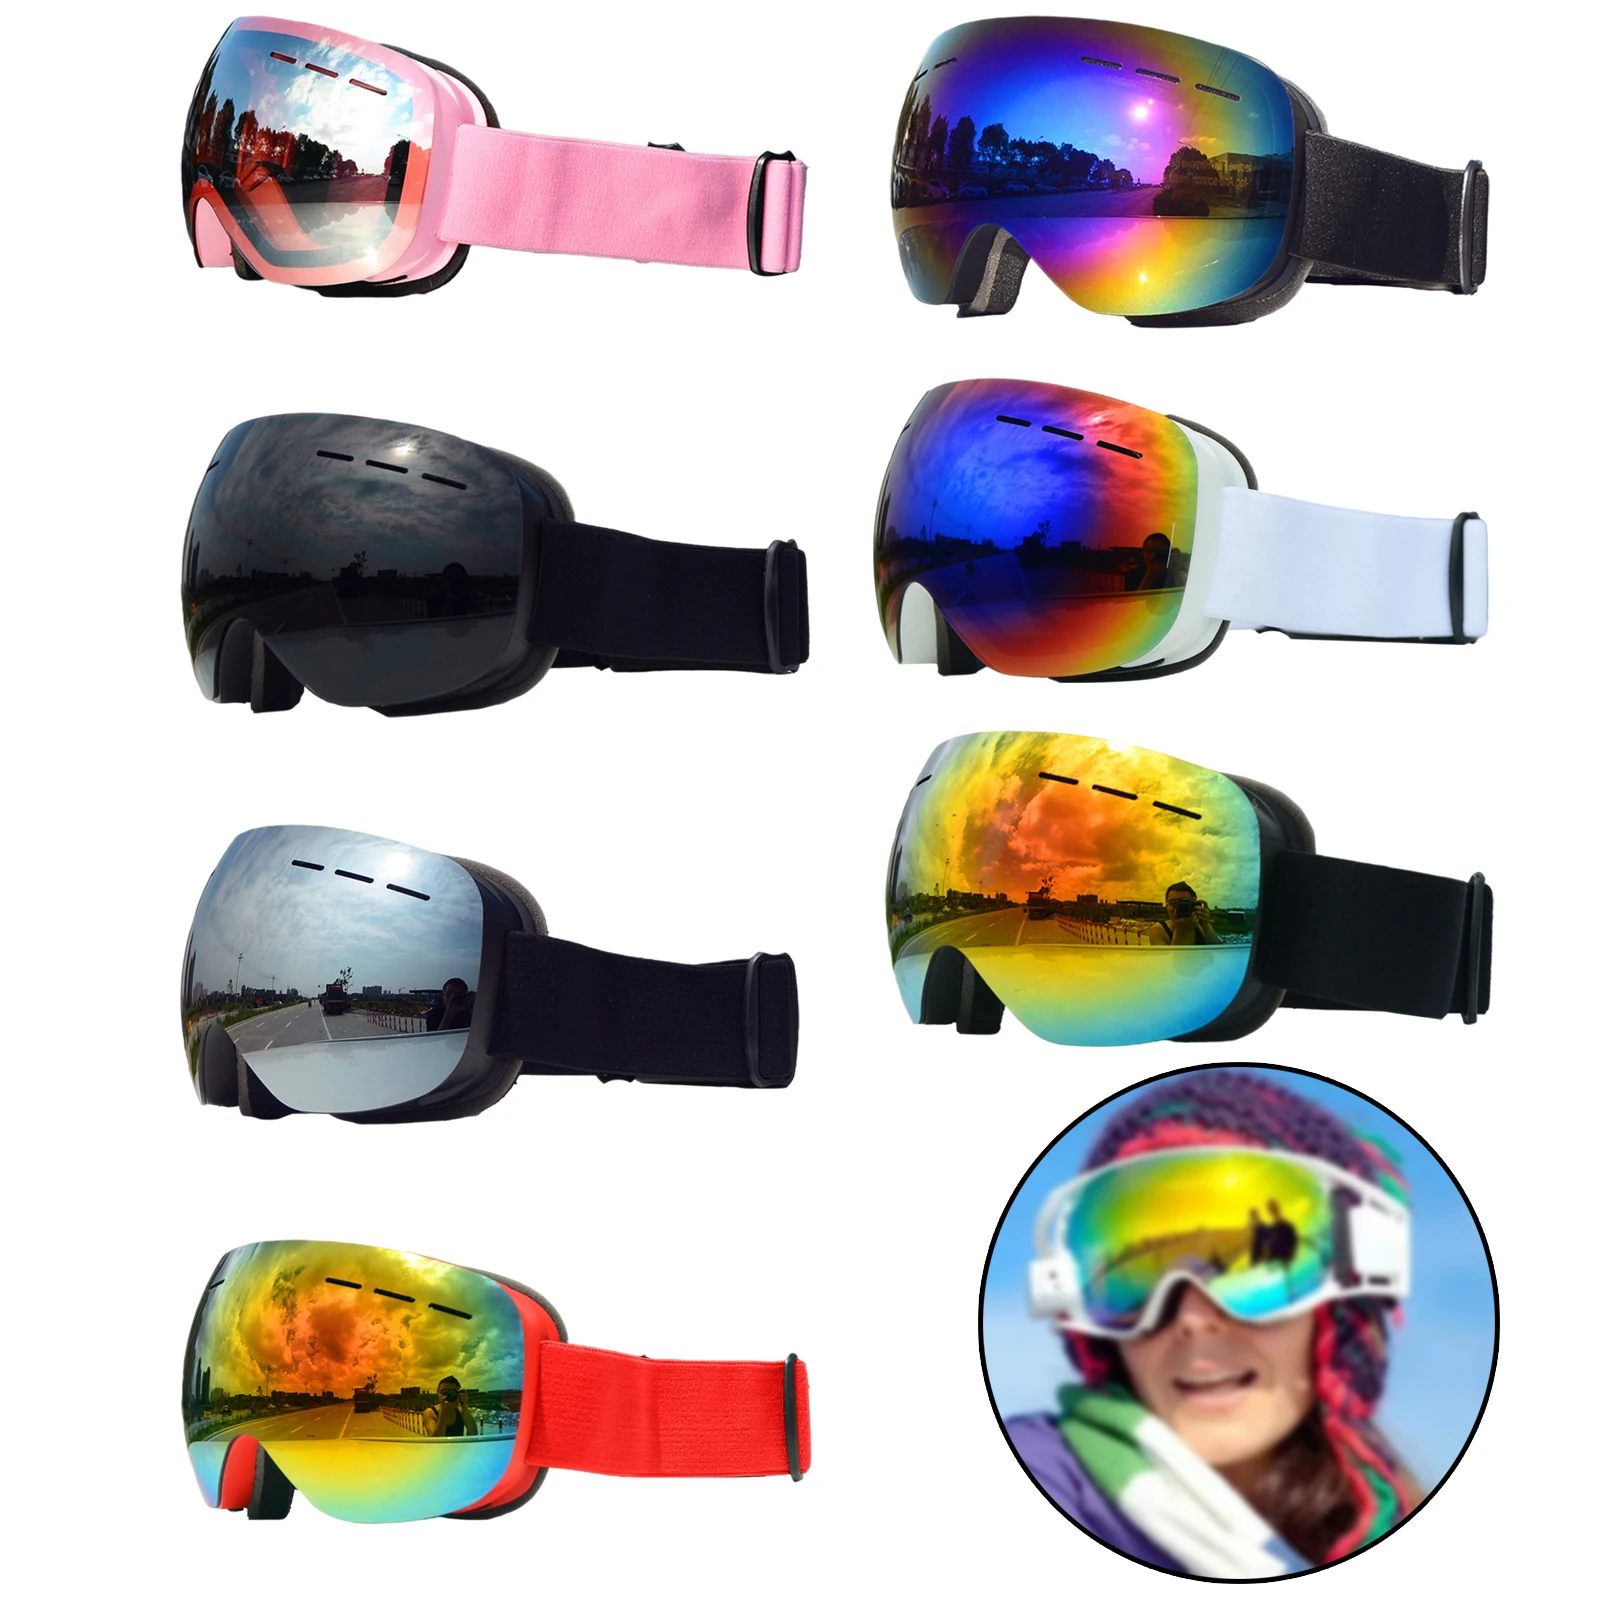 Magnetic Ski Goggles Dustproof Frameless Protection Glasses for Skiing